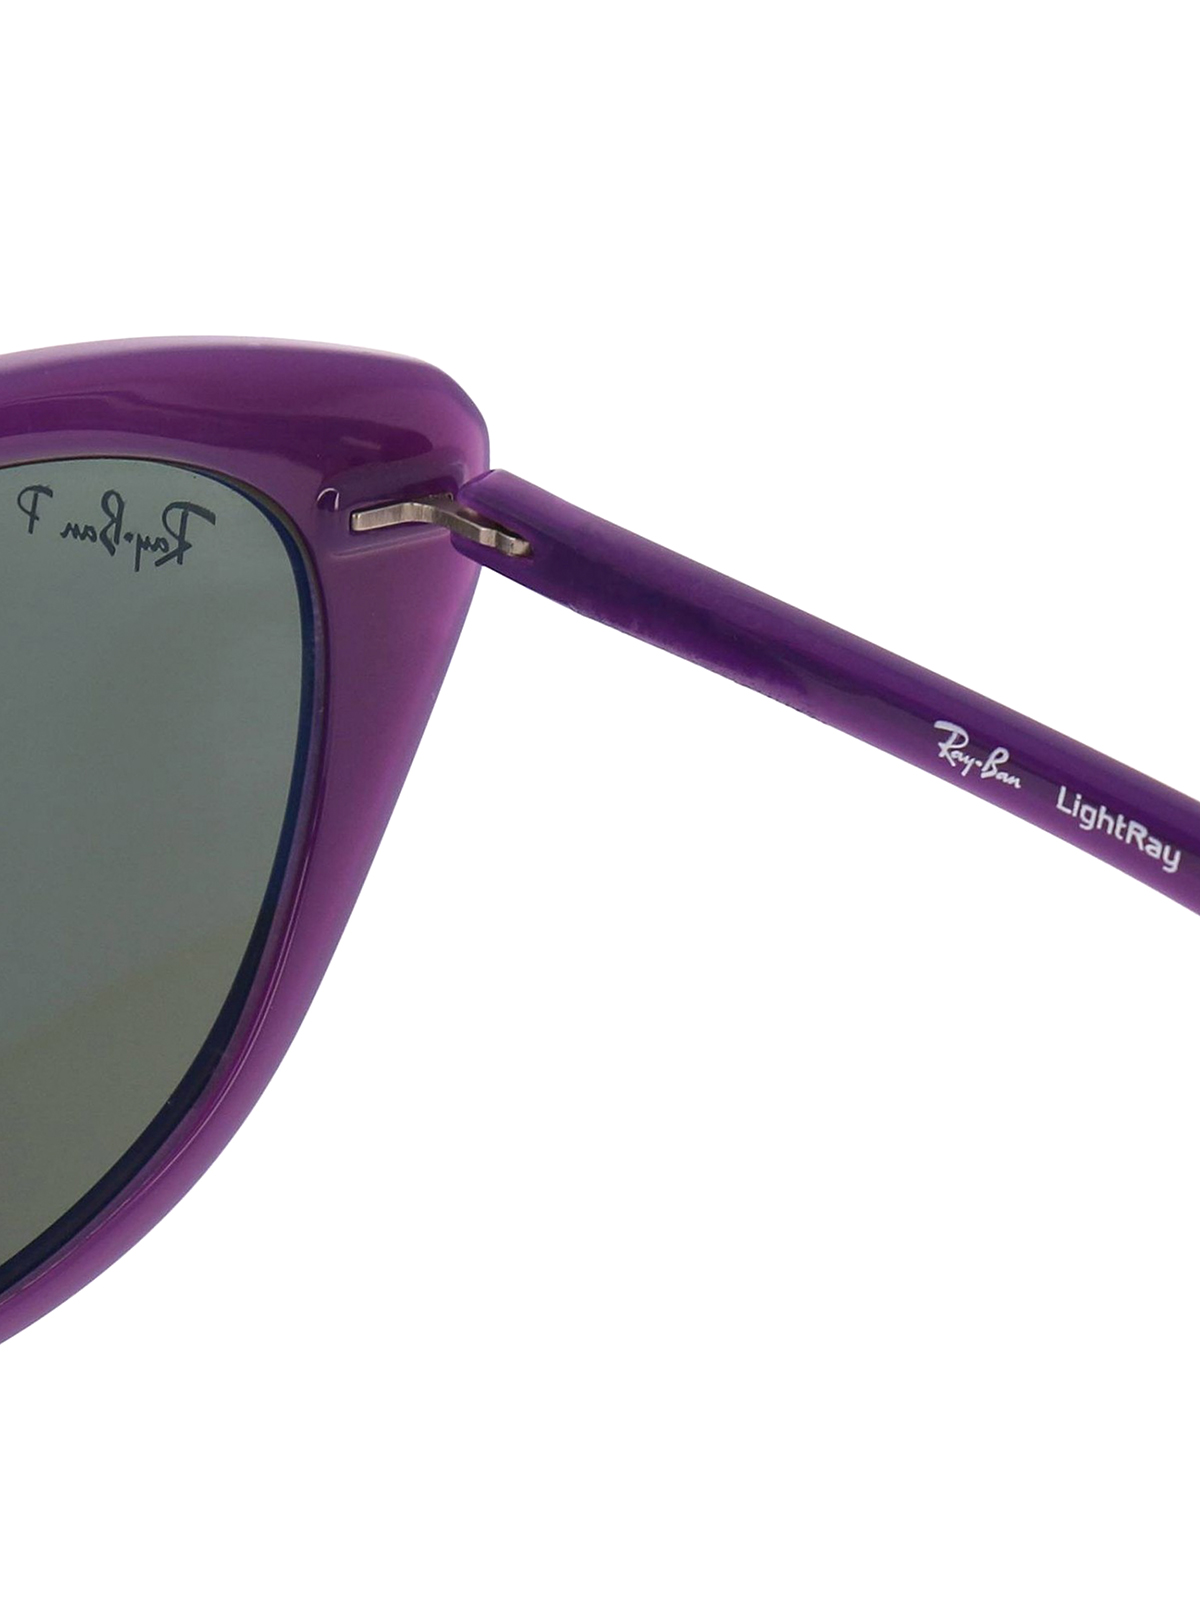 ray ban violet sunglasses